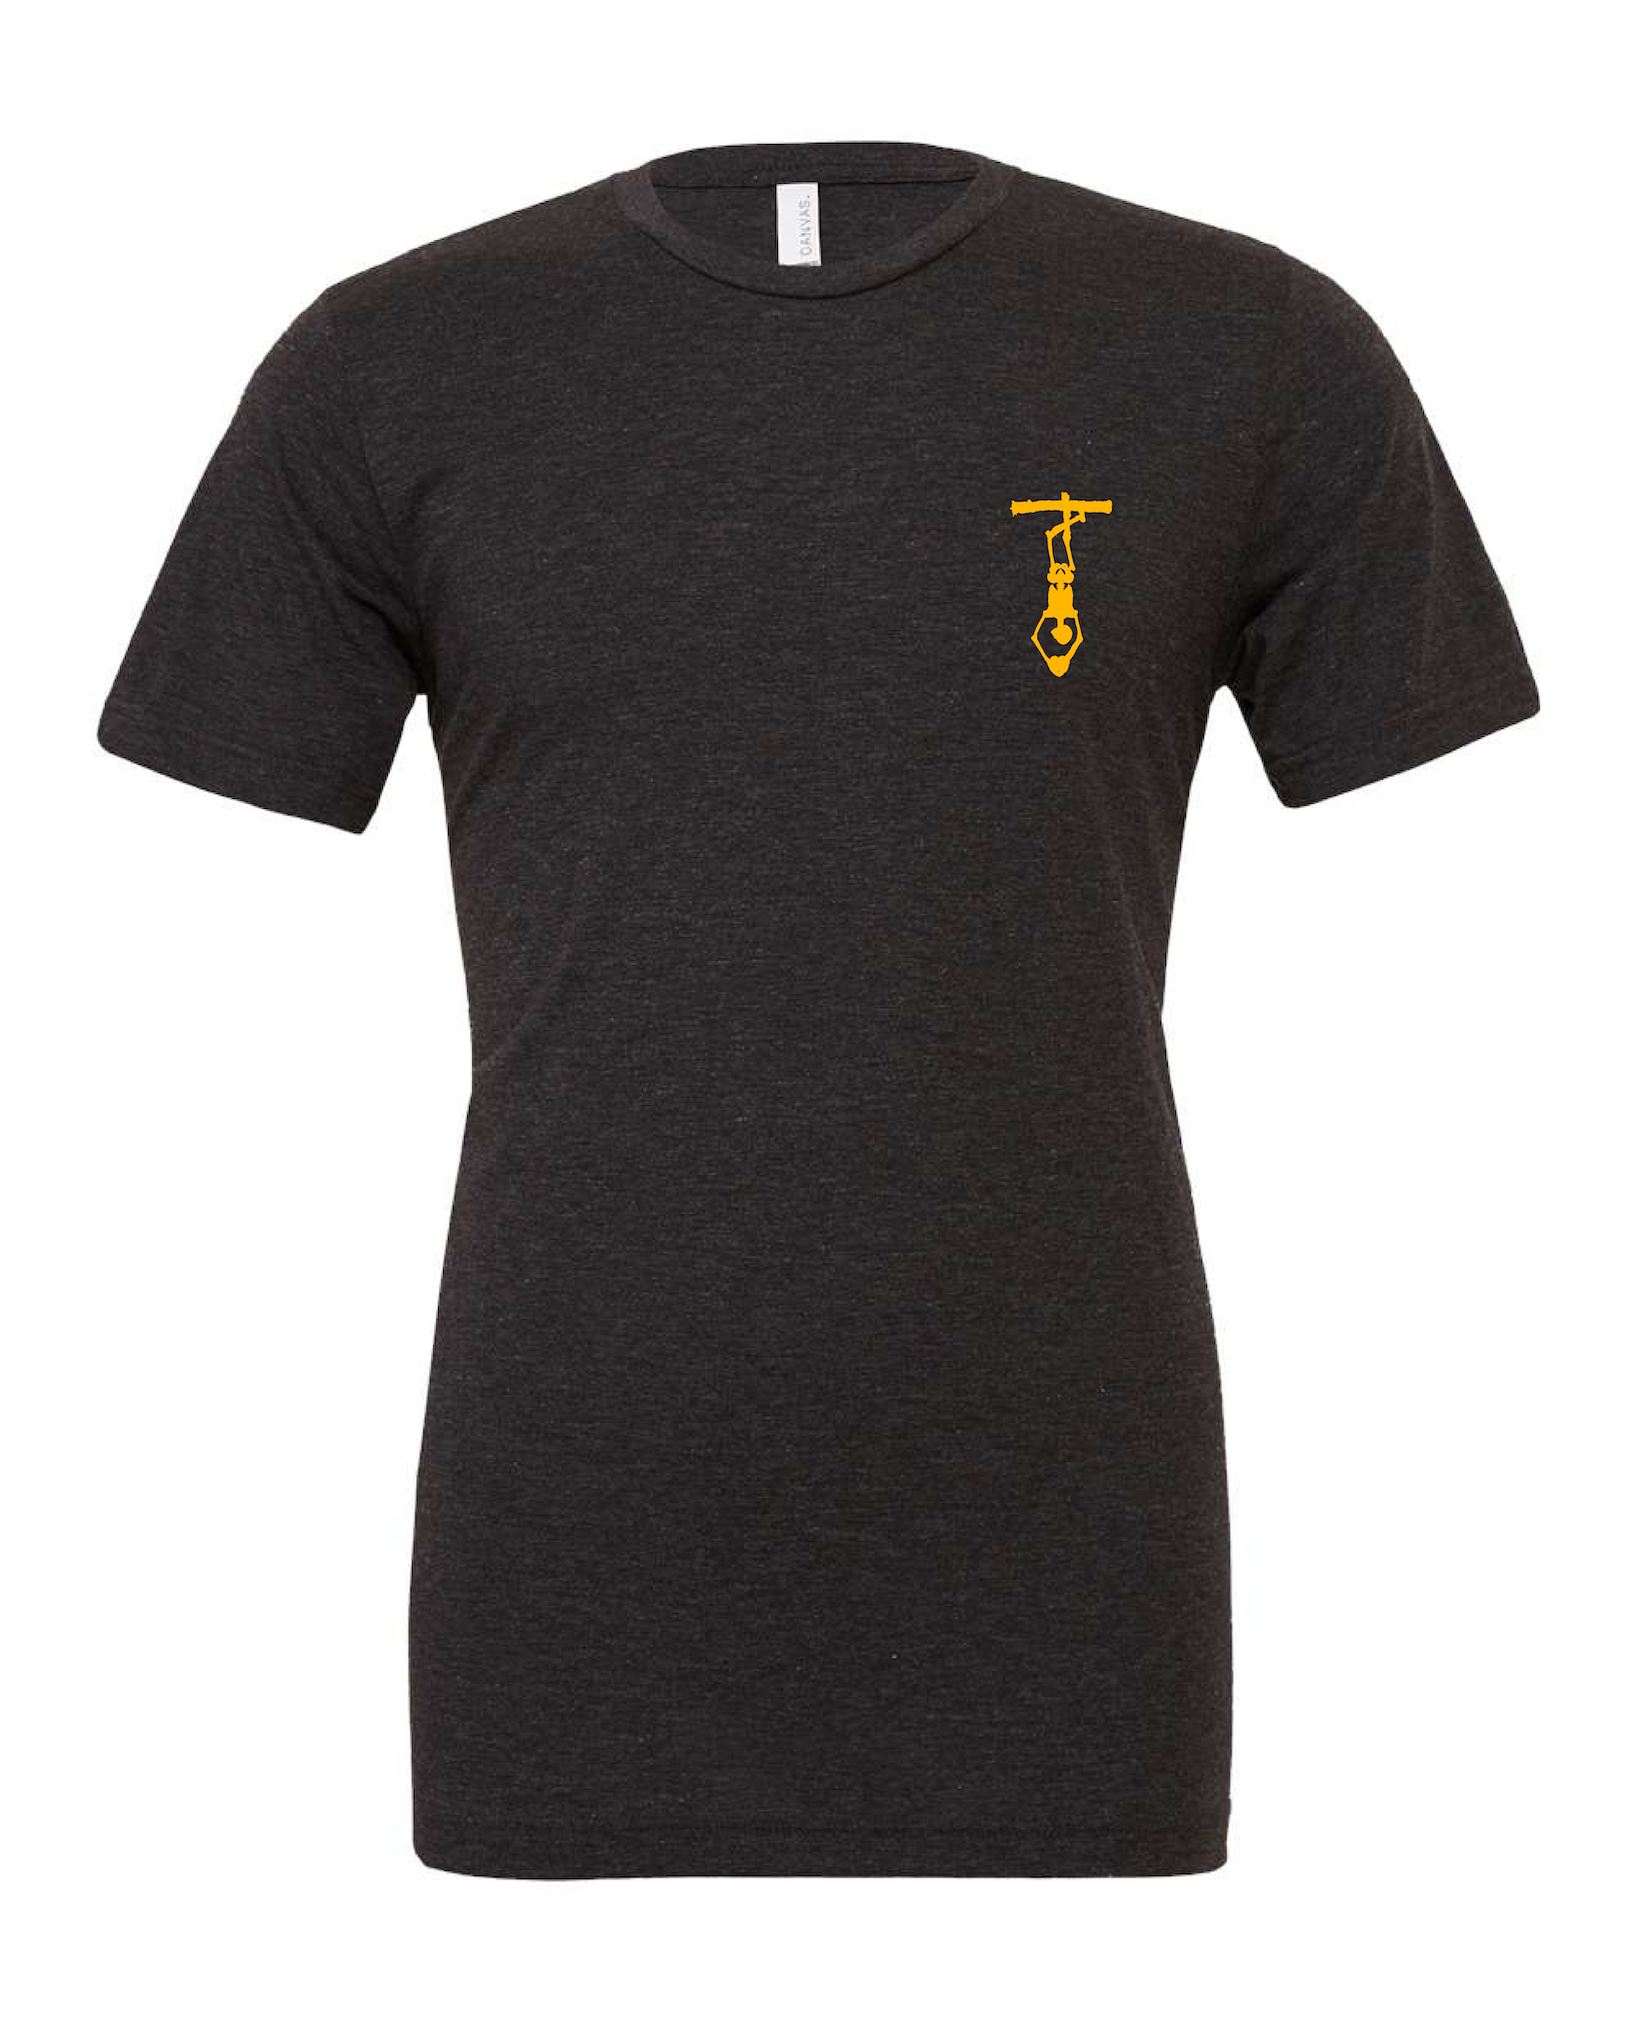 Cross Bones T-shirt - Yellow Print